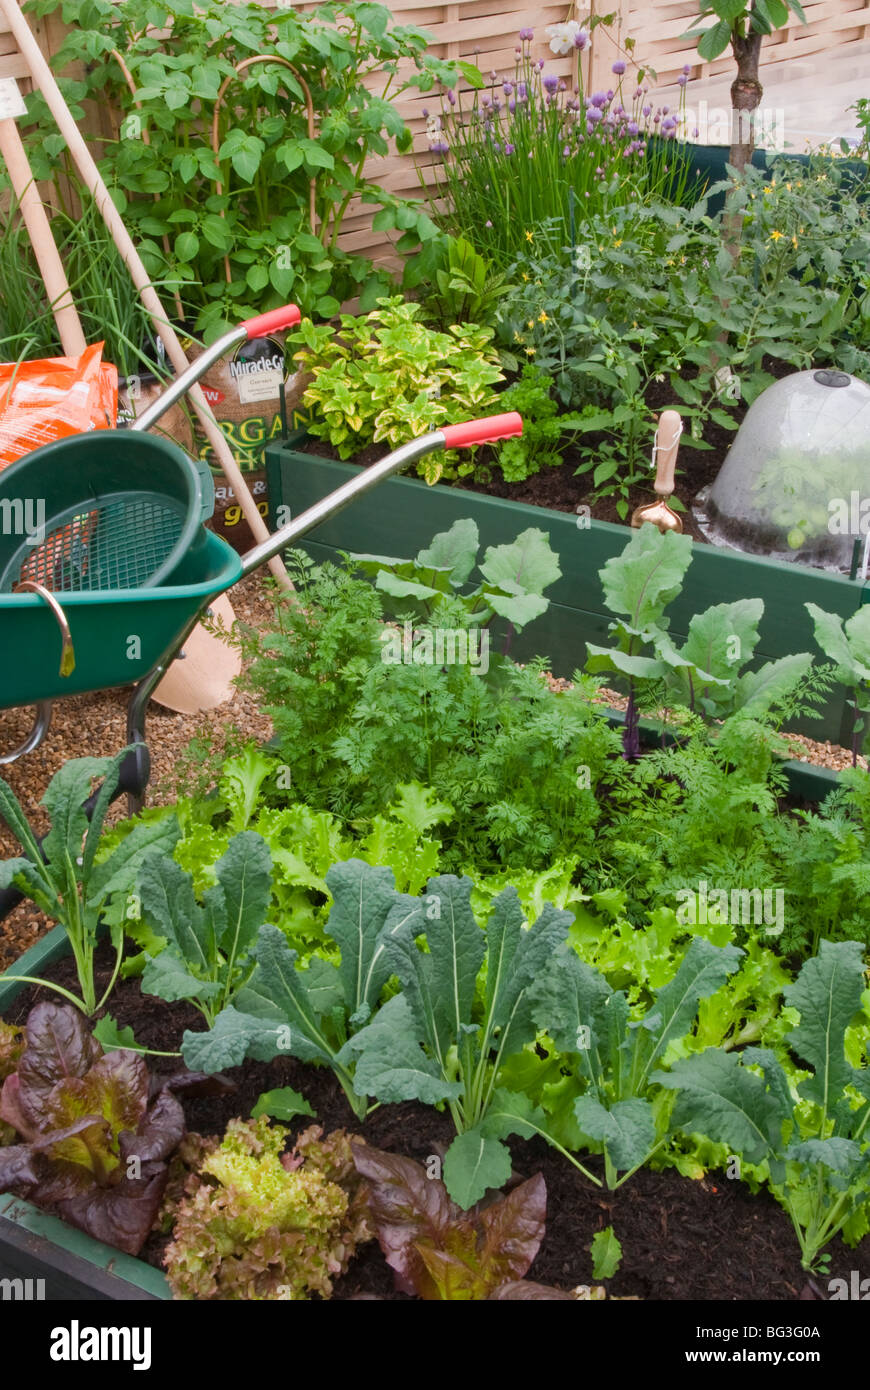 Vegetable Garden, Wheelbarrow, Plants, raised beds, tools, gardening a mixture of food crops in the backyard Stock Photo